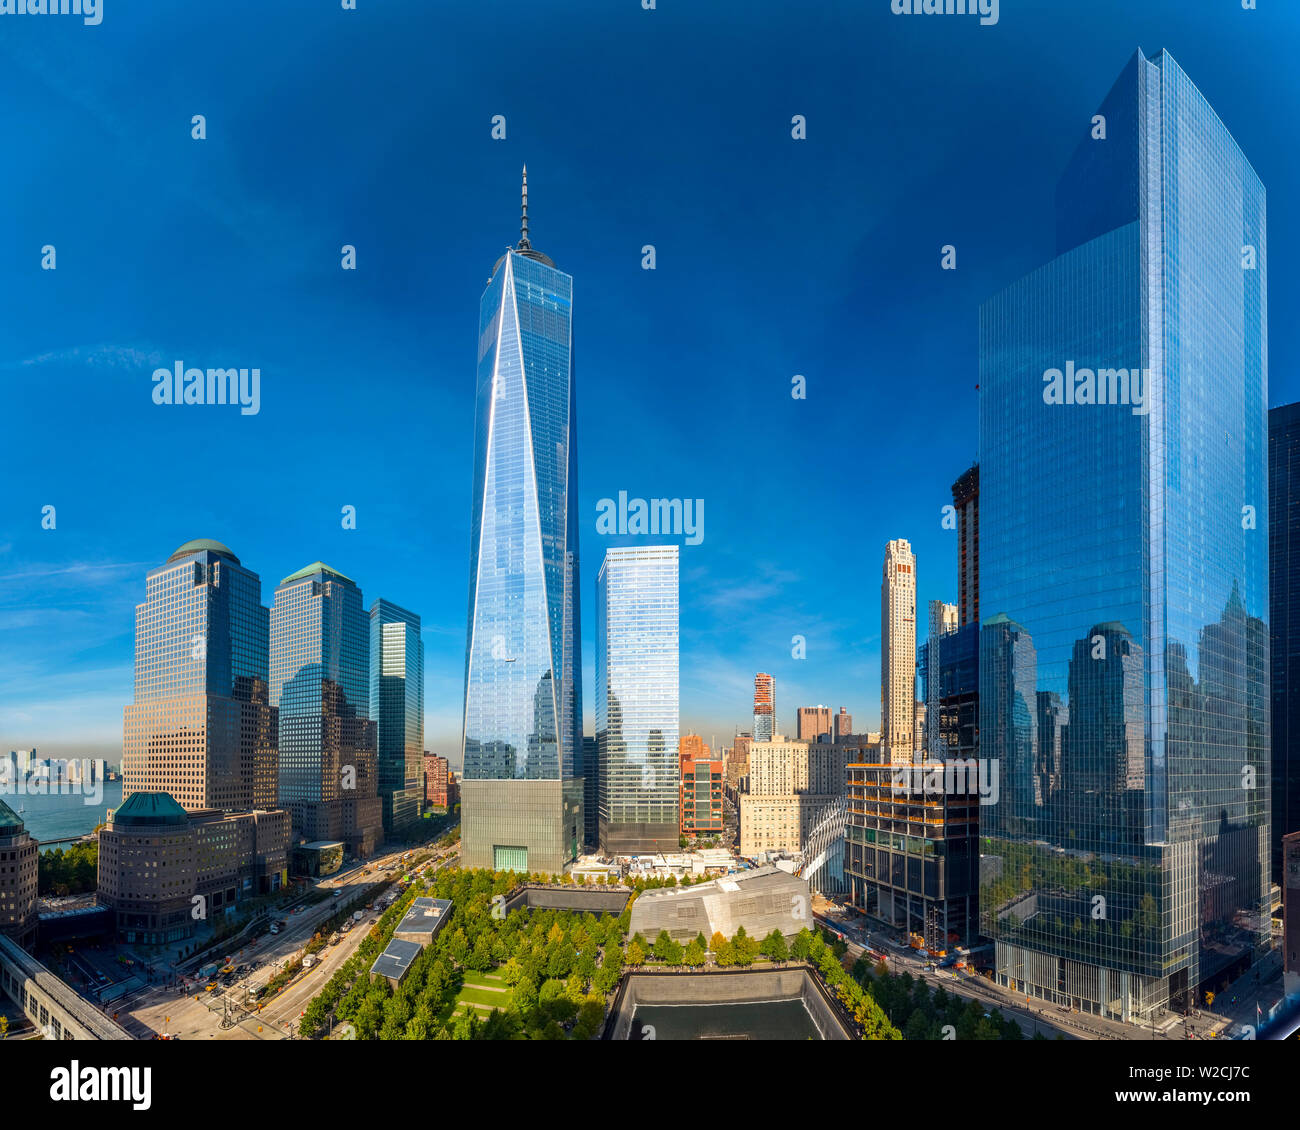 USA, New York, Manhattan, Downtown, World Trade Center, Freedom Tower or One World Trade Center Stock Photo